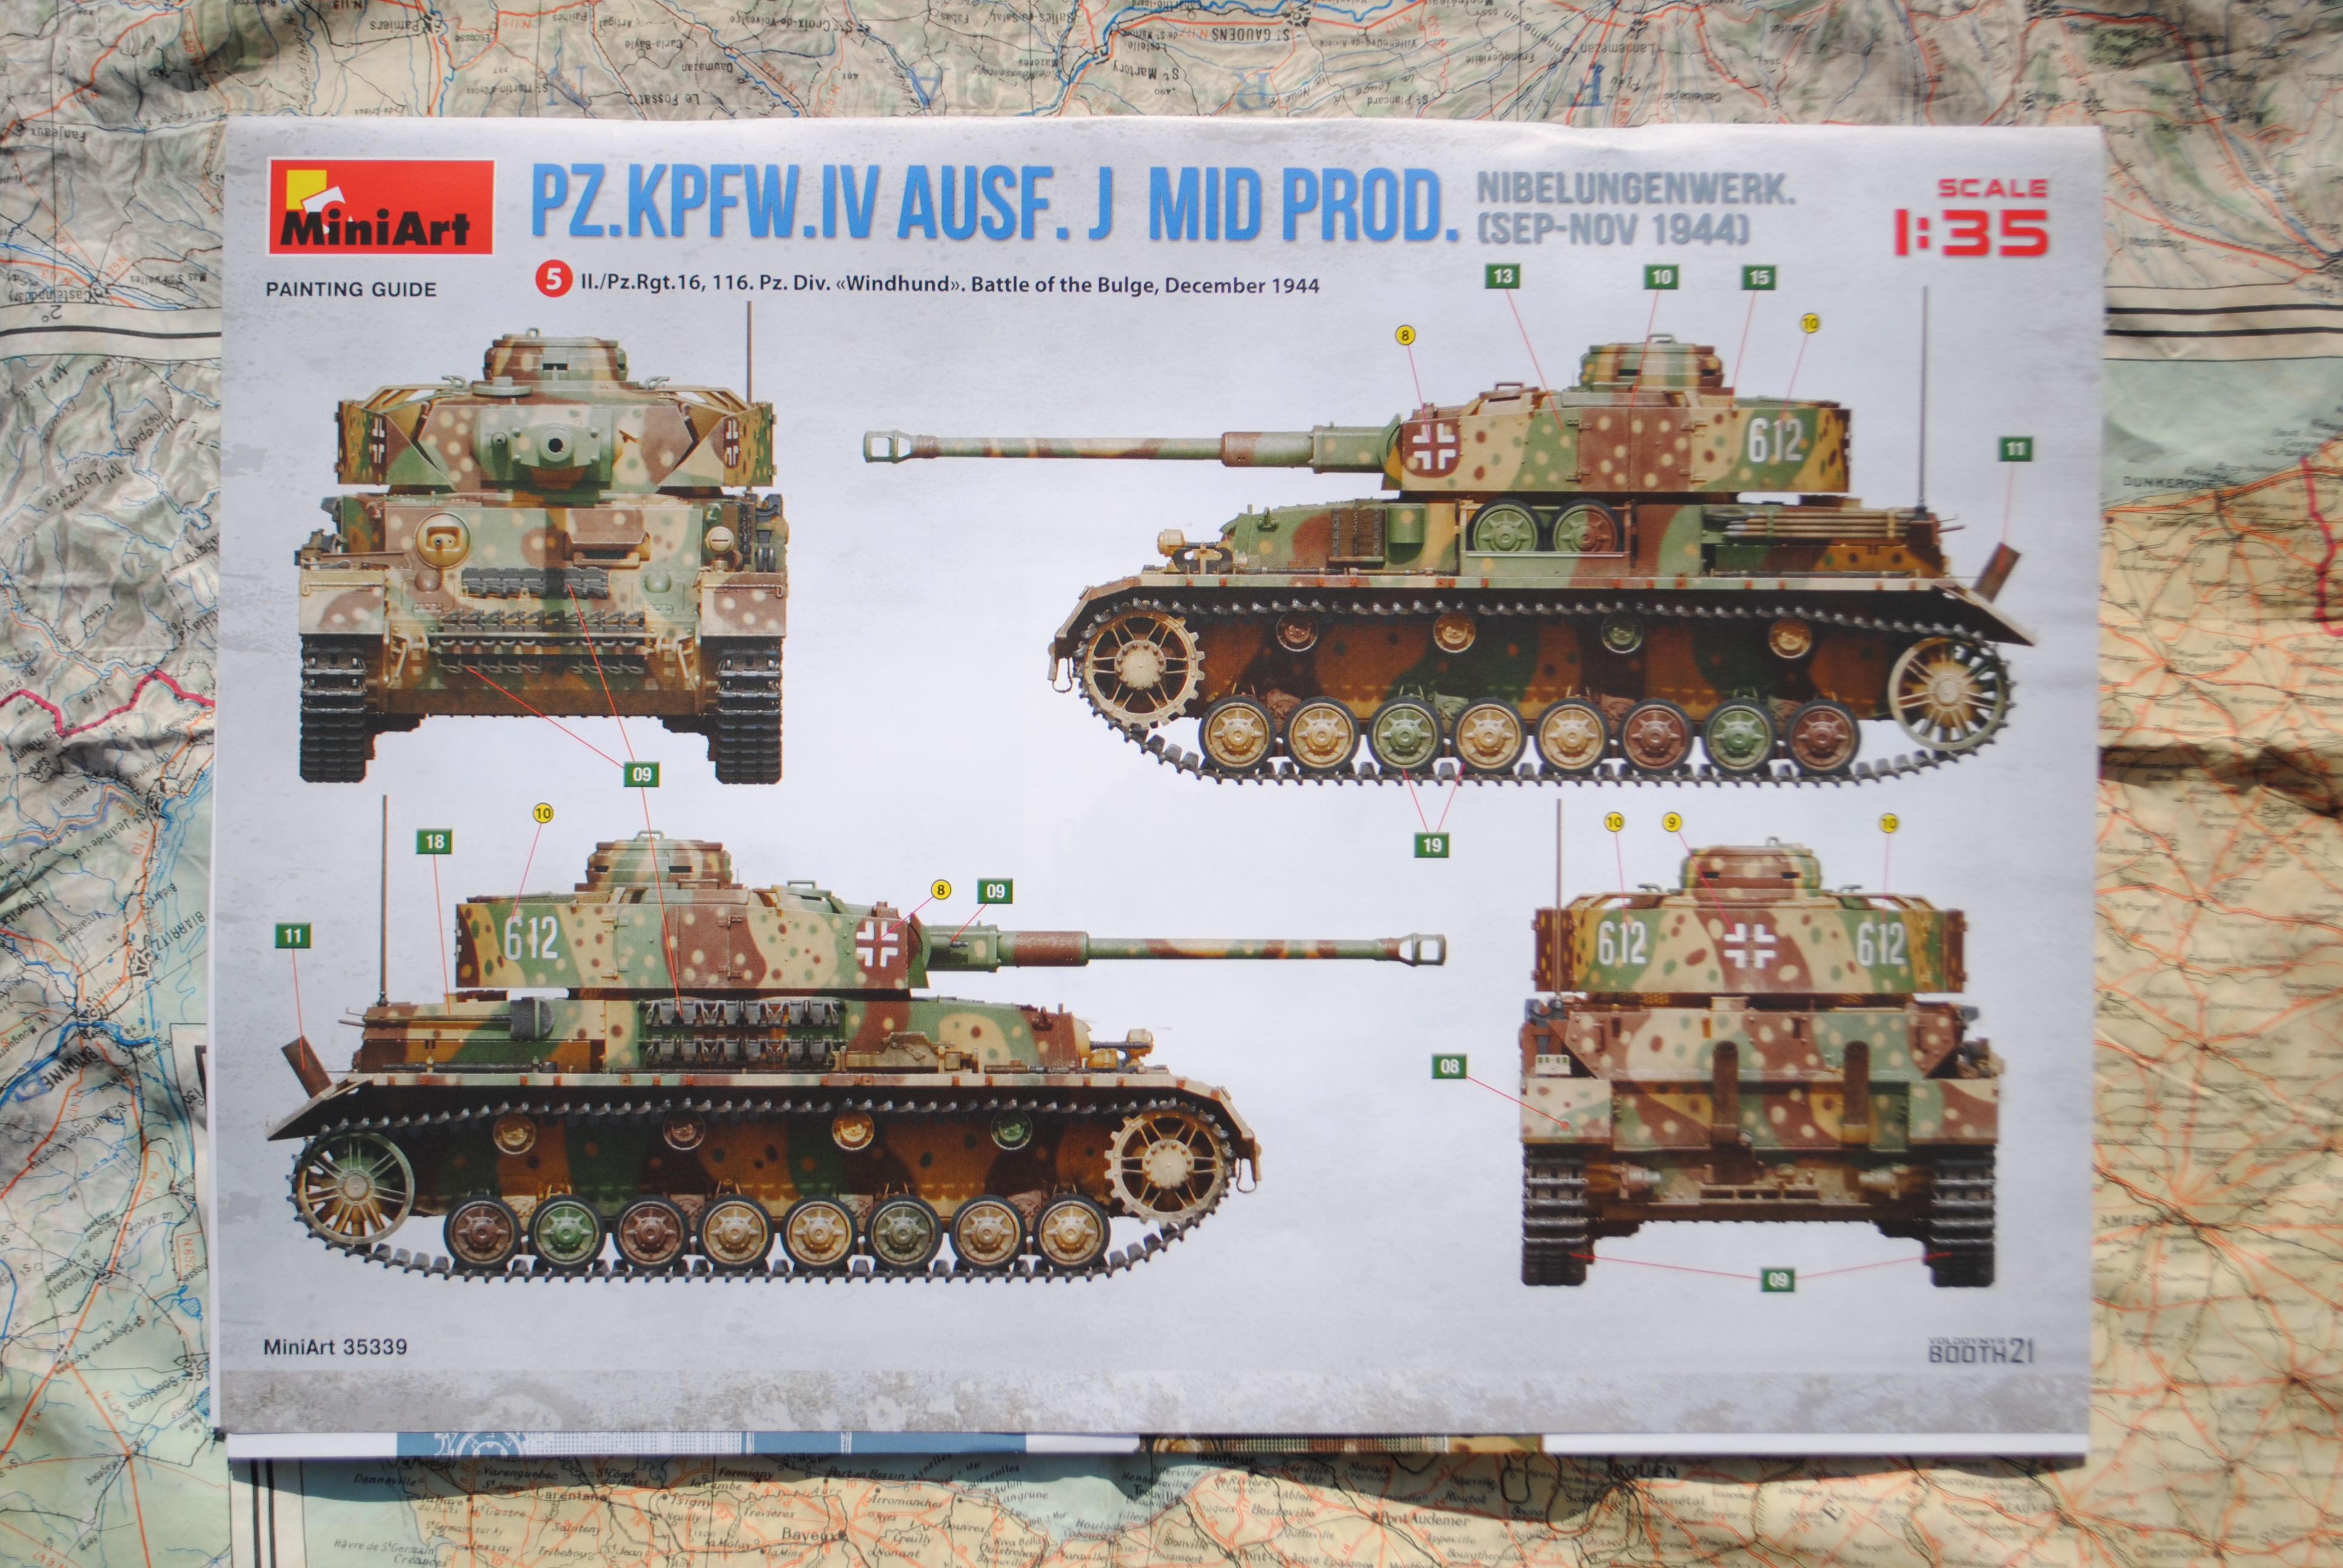 Mini Art 35339 Pz.Kpfw.IV Ausf.J NIBELUNGENWERK Mid. Prod. - Sep.-Nov. 1944